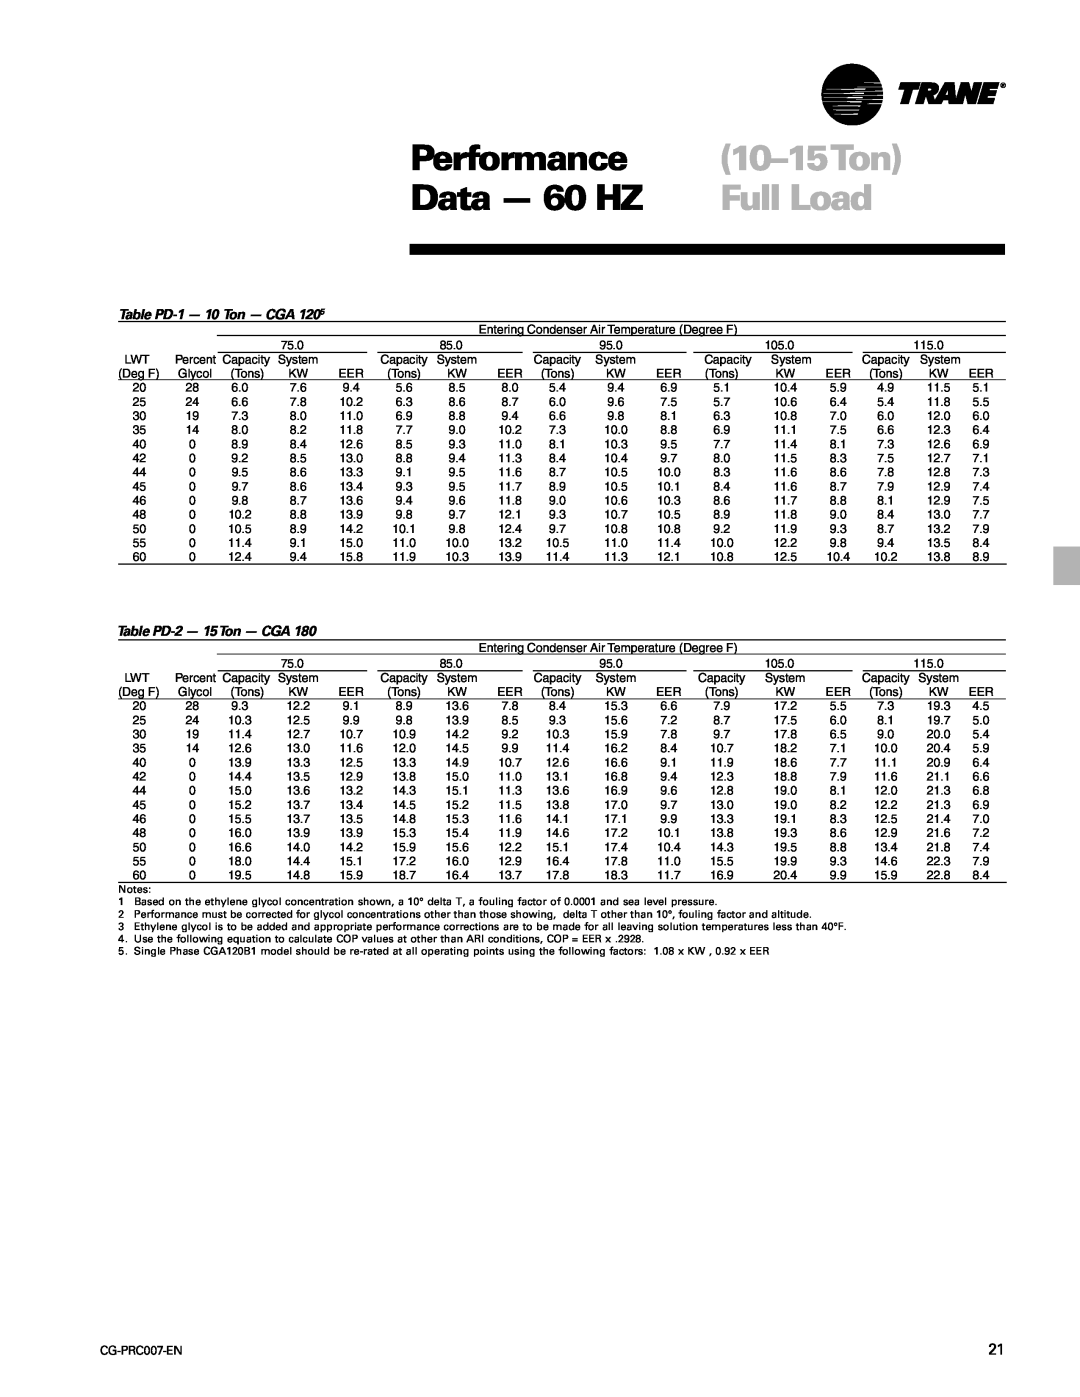 Trane CG-PRC007-EN manual Performance, Data - 60 HZ, Full Load, 10-15Ton, Table PD-1- 10 Ton - CGA, Table PD-2- 15Ton - CGA 